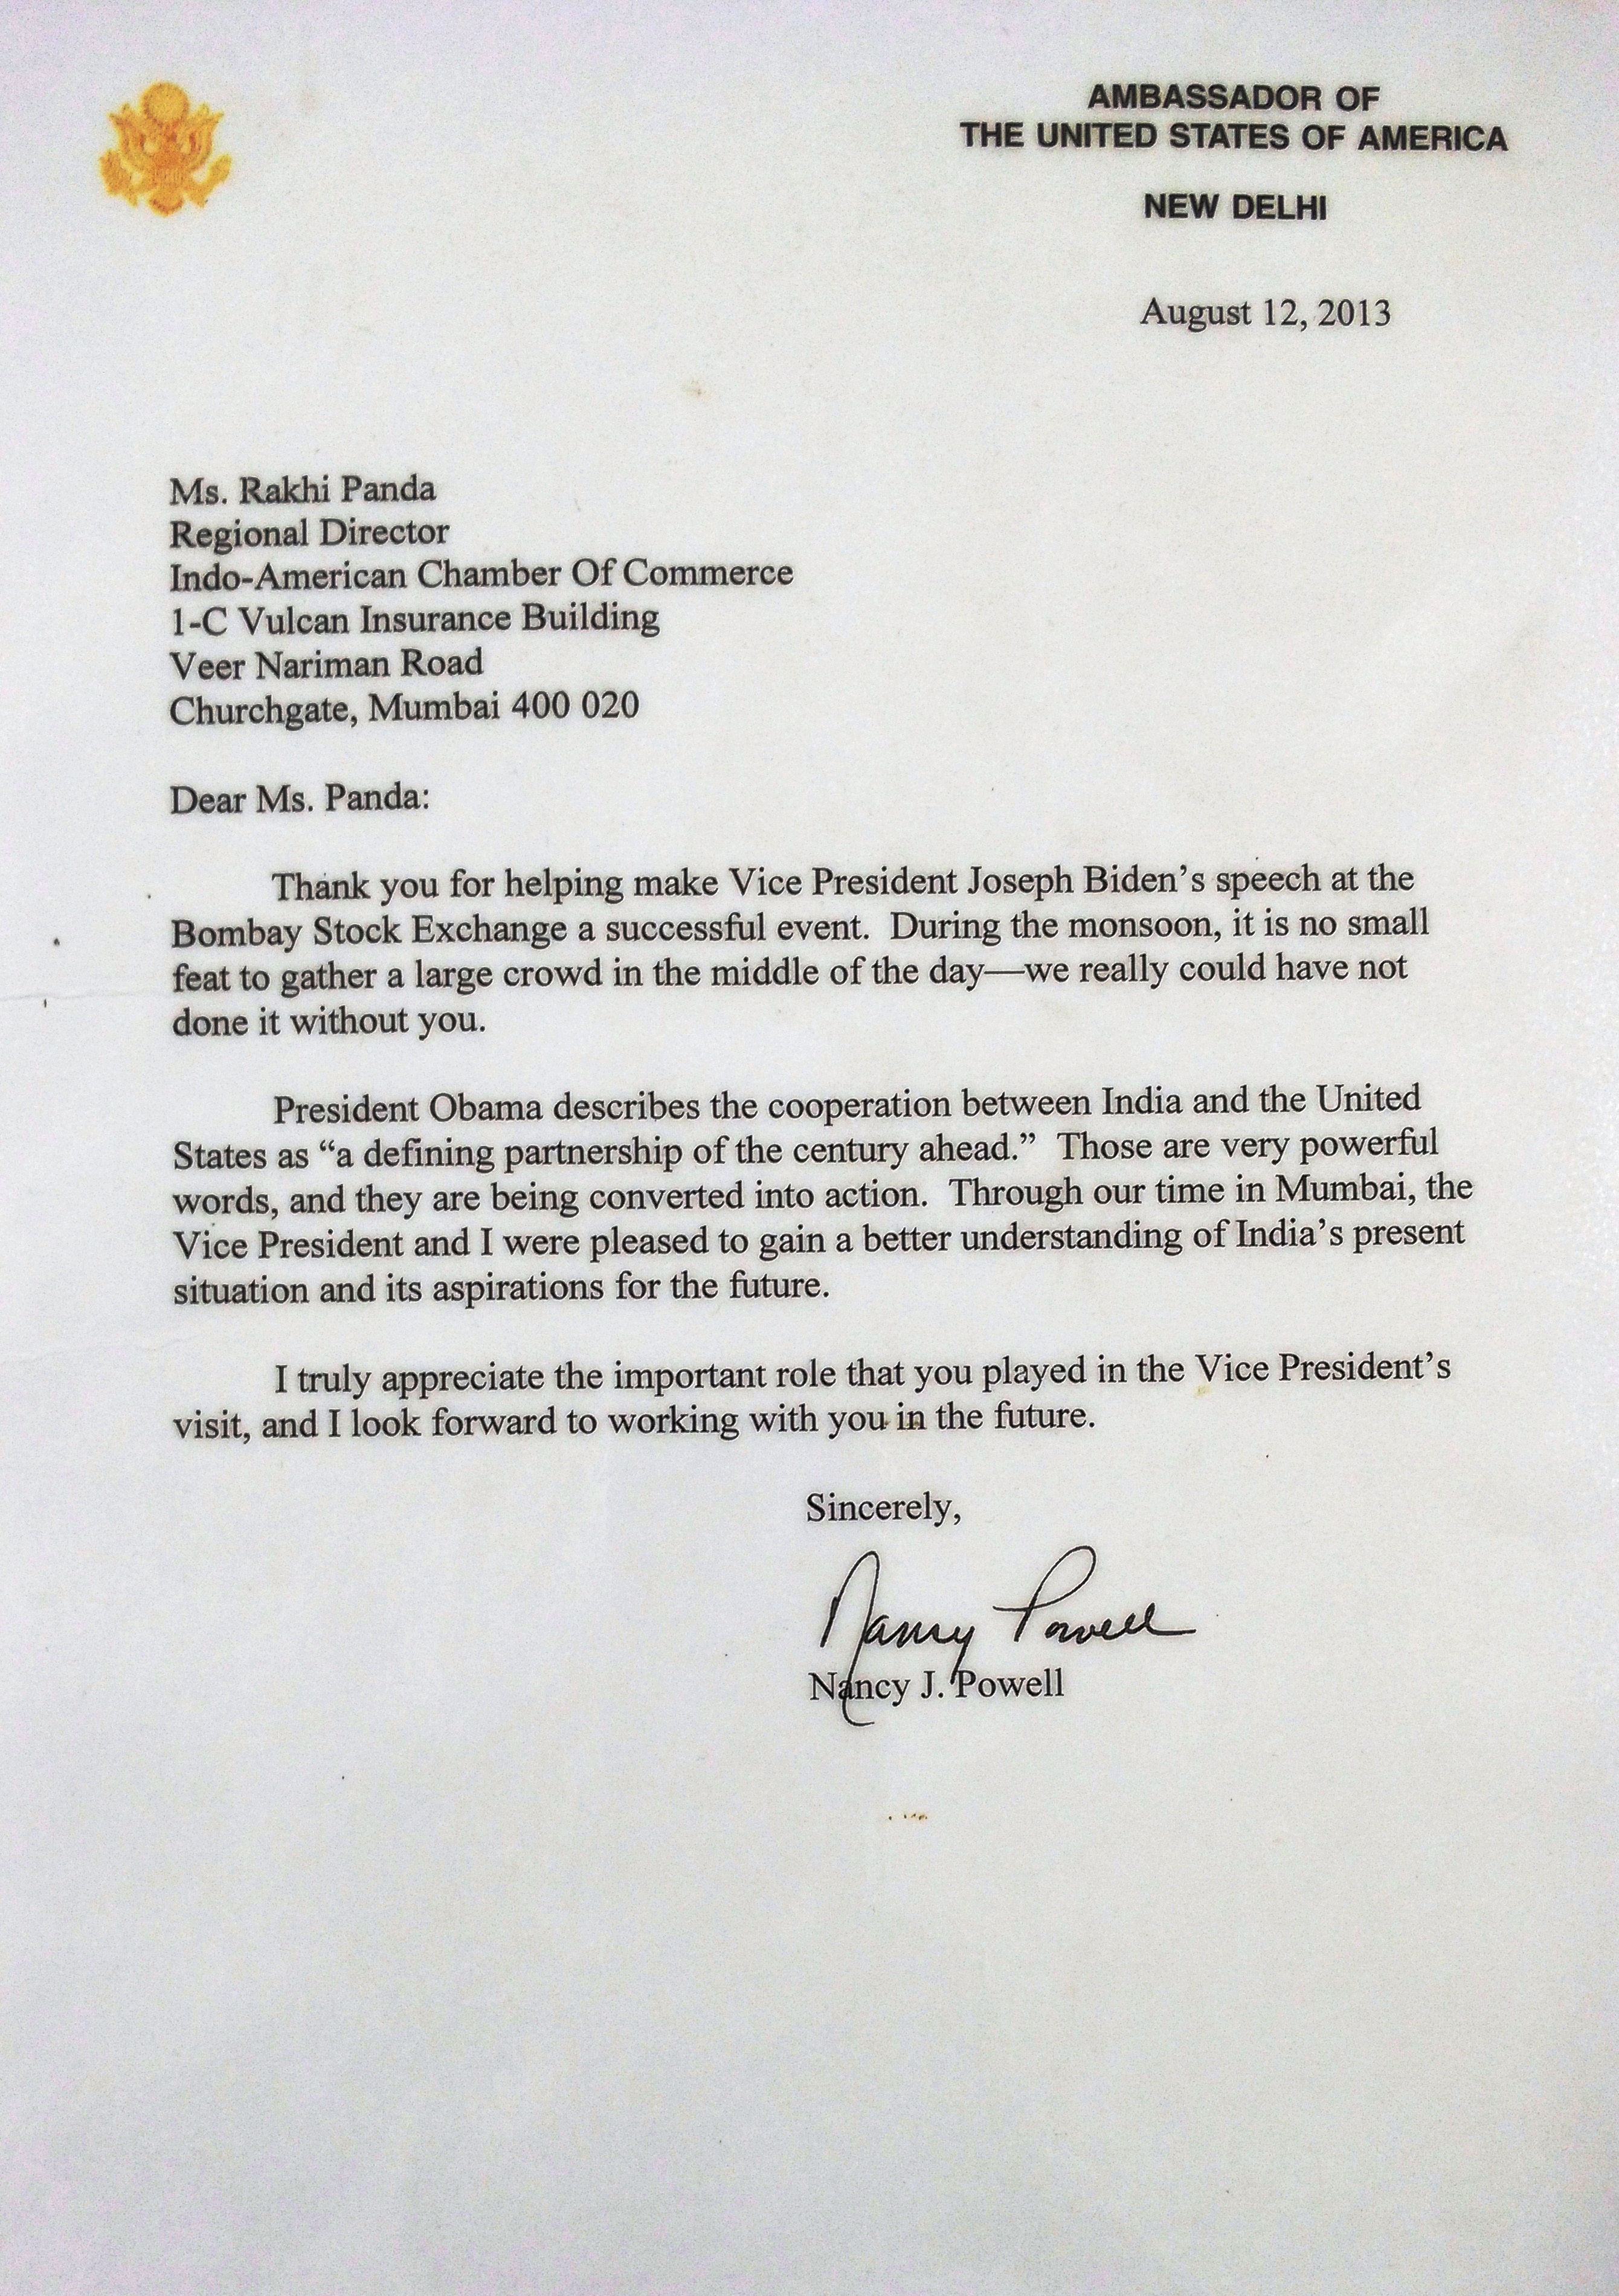 Letter of Appreciation from Former US Ambassador Ms. Nancy Powell